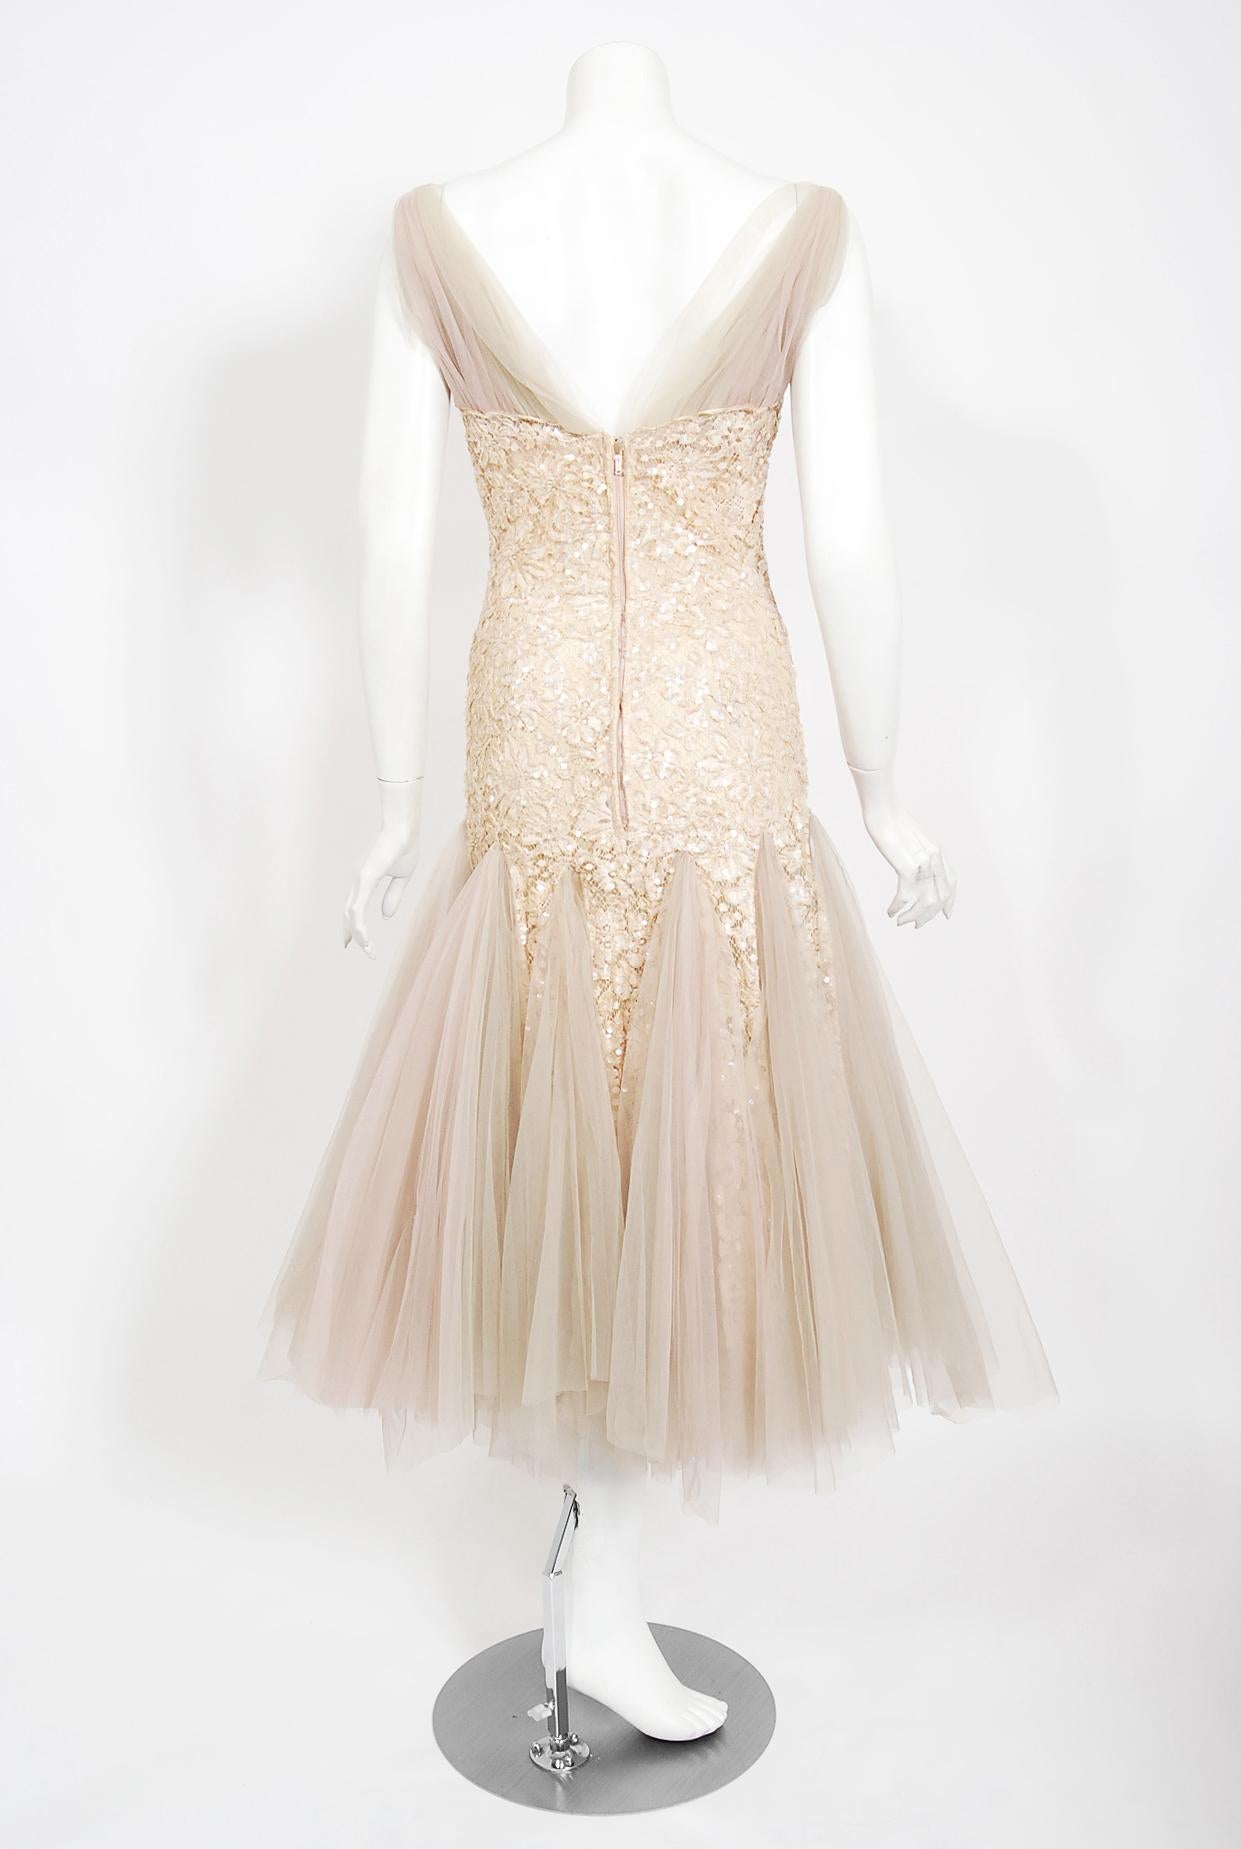 Vintage 1950's Anne Verdi Champagne Sequin Lace & Tulle Bustle Back Bridal Dress For Sale 6